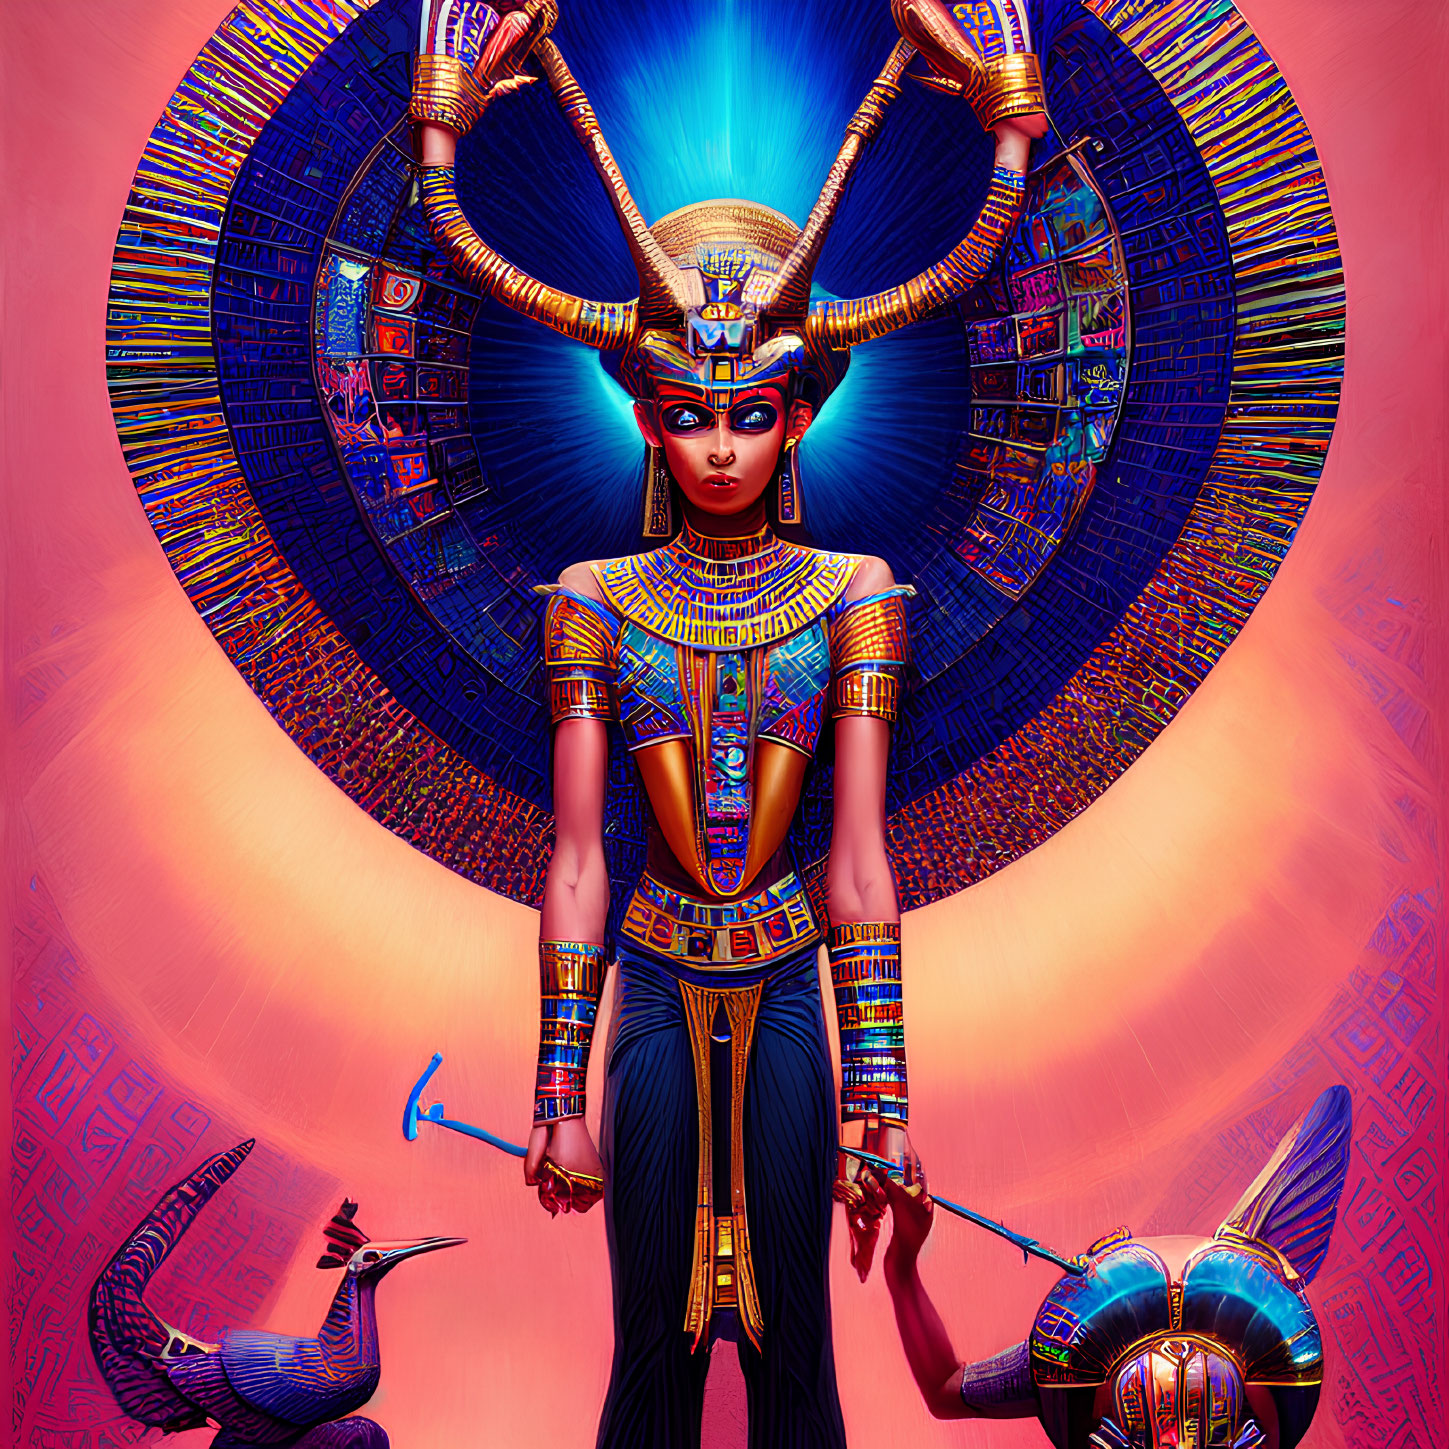 Egyptian Goddess Artwork with Elaborate Headgear and Vibrant Colors